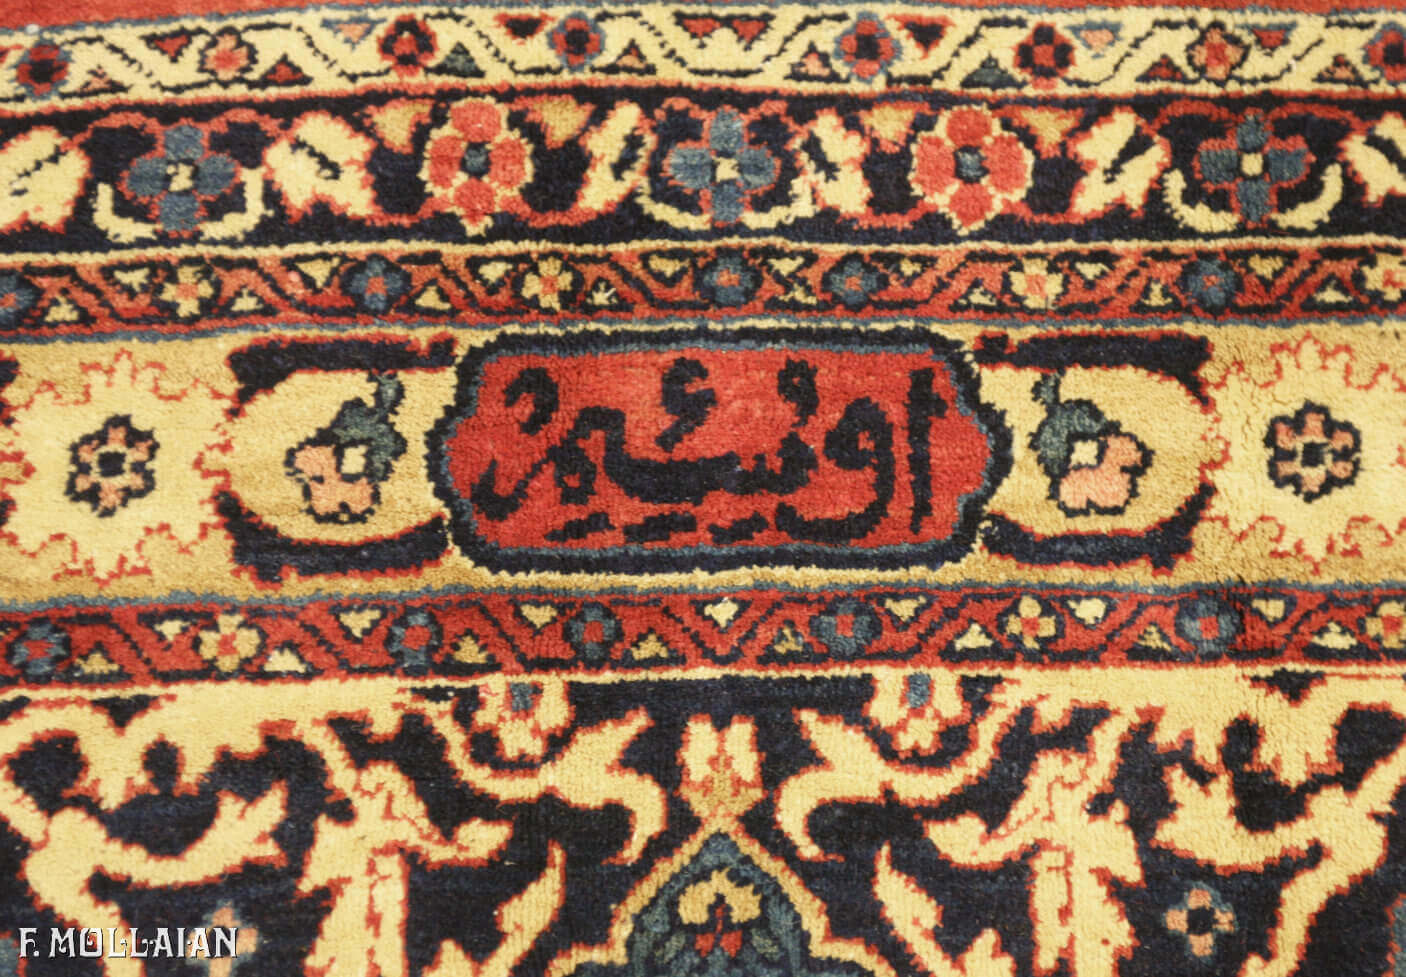 Antique Persian Kerman Signed “OCM” Carpet n°:12689950